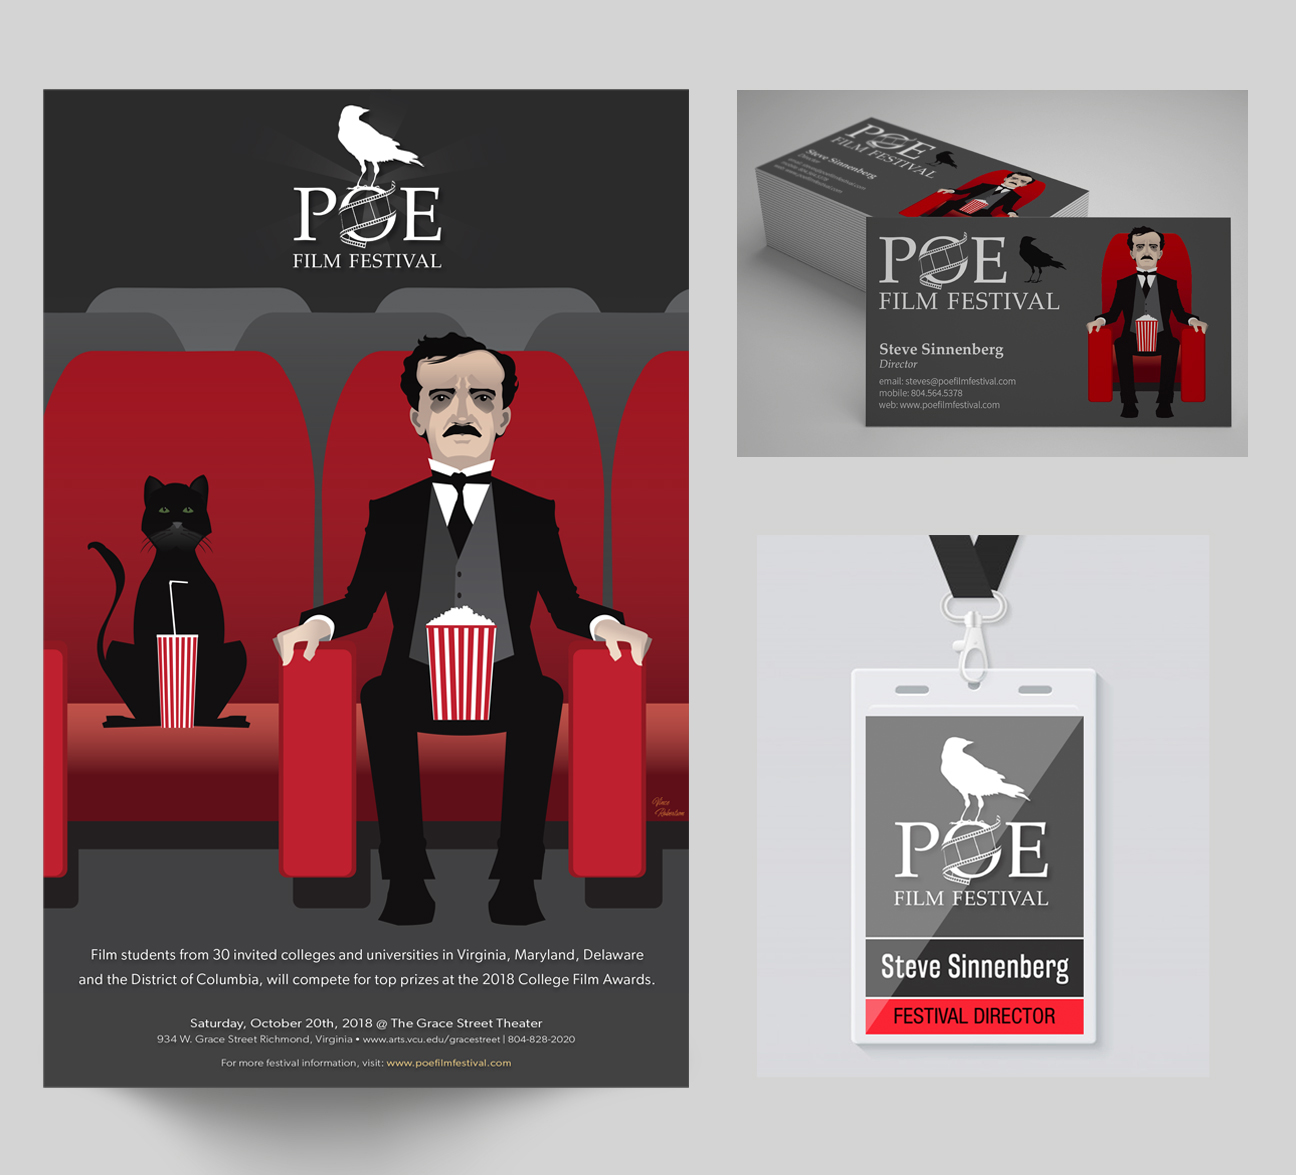 Poe Film Festival files